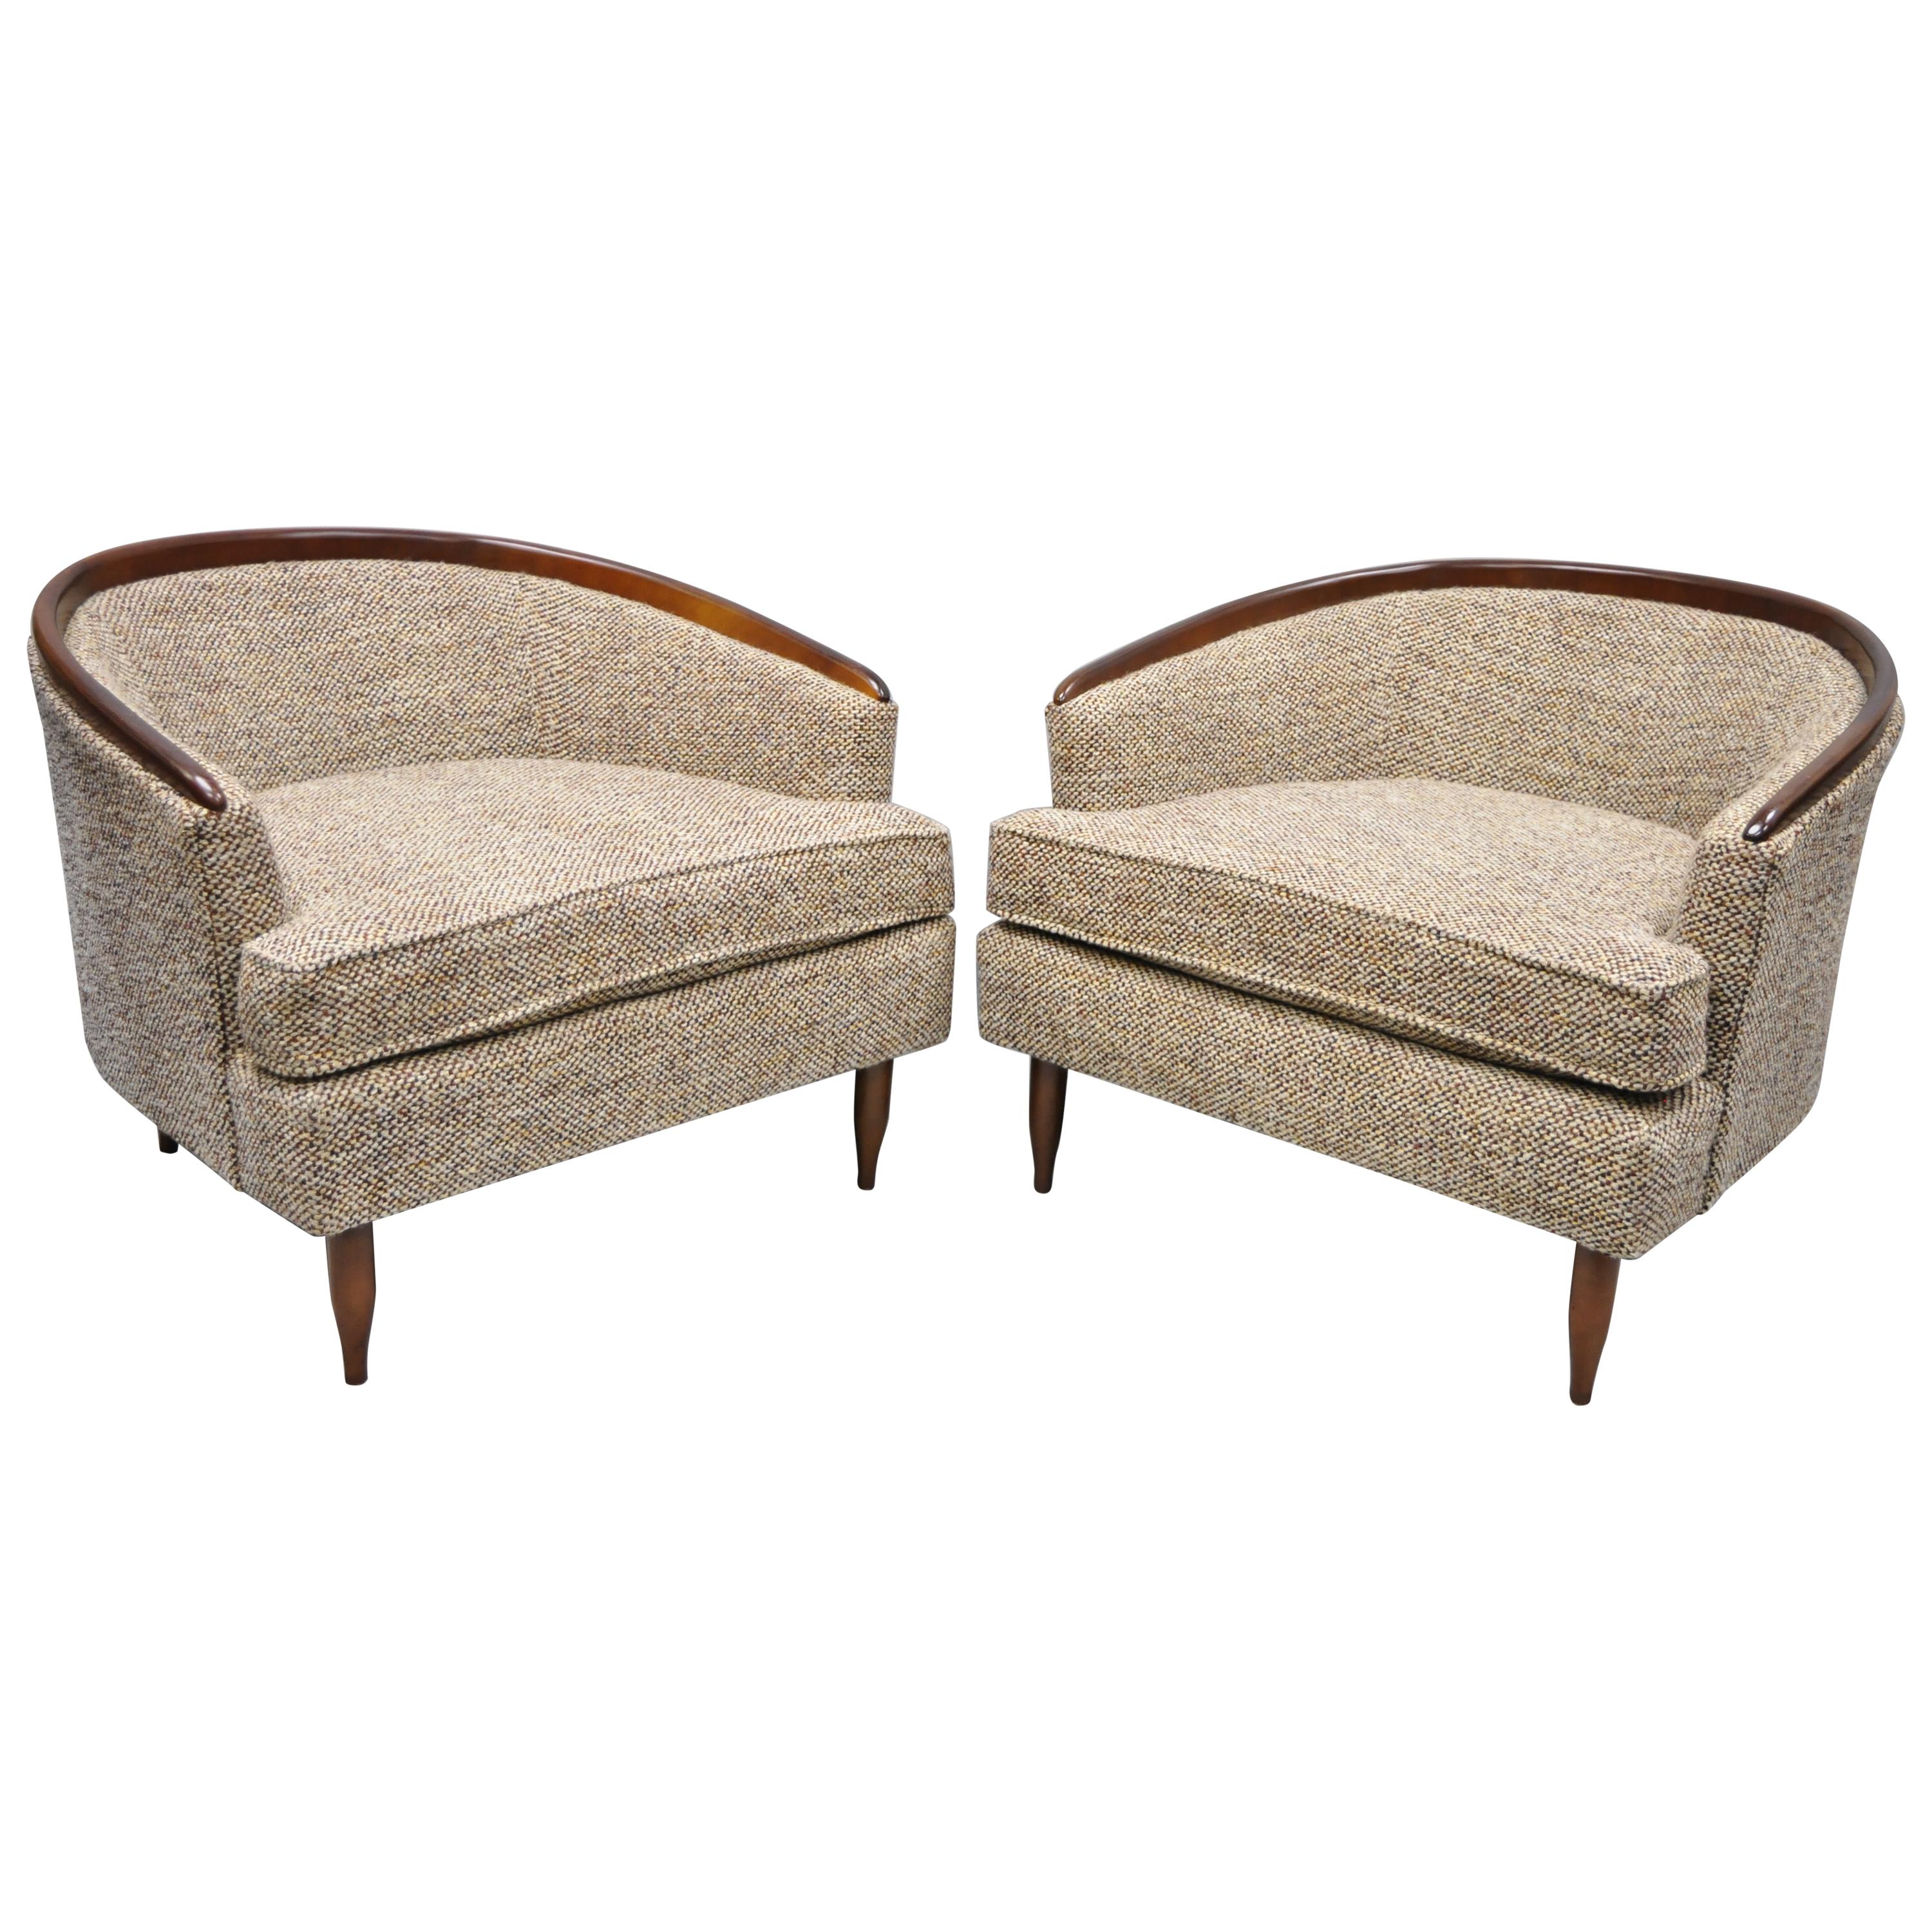 Wide Barrel Back Mid-Century Modern Club Lounge Chair after Milo Baughman, Pair